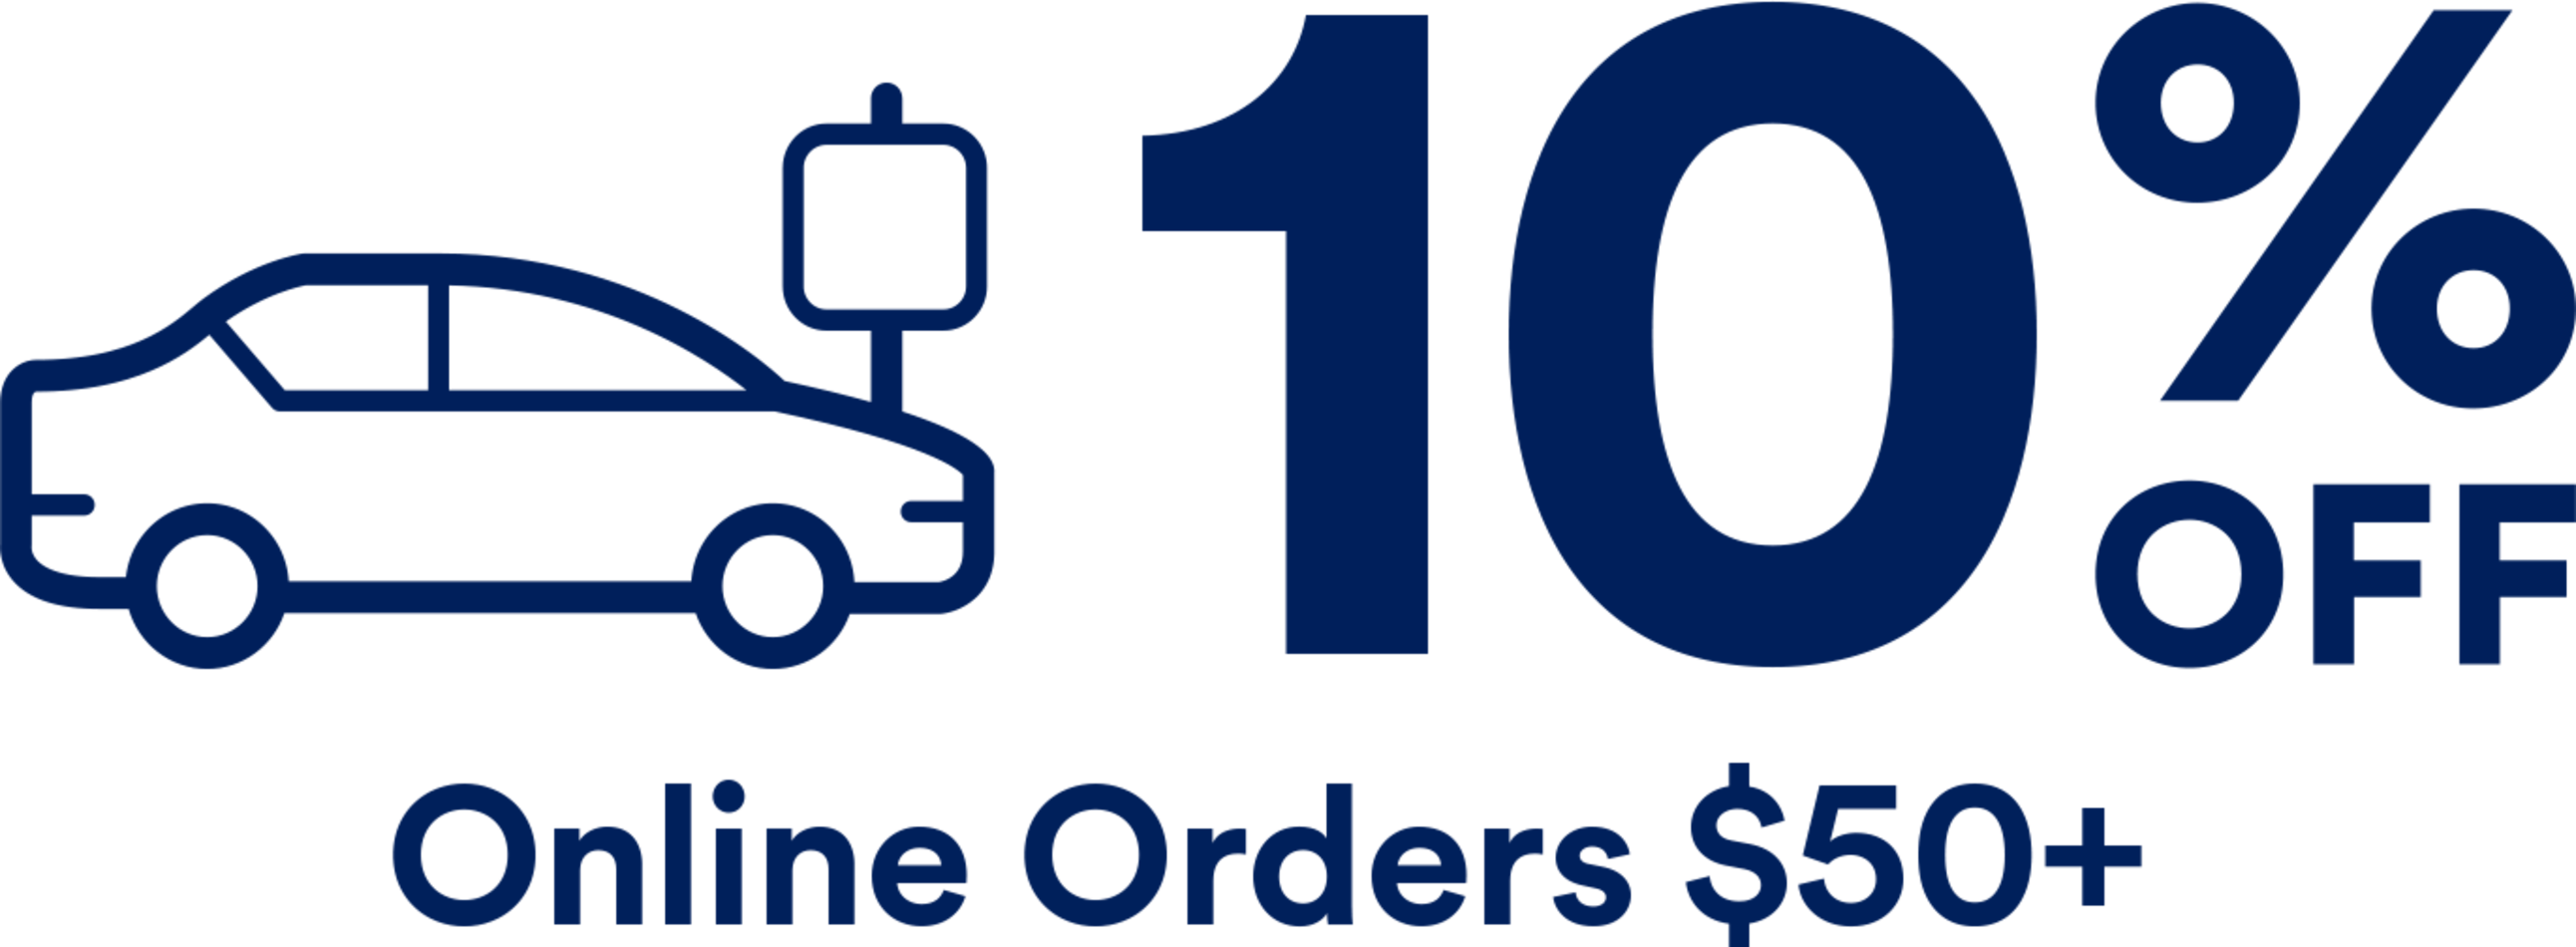 10% off Online Orders $50+.